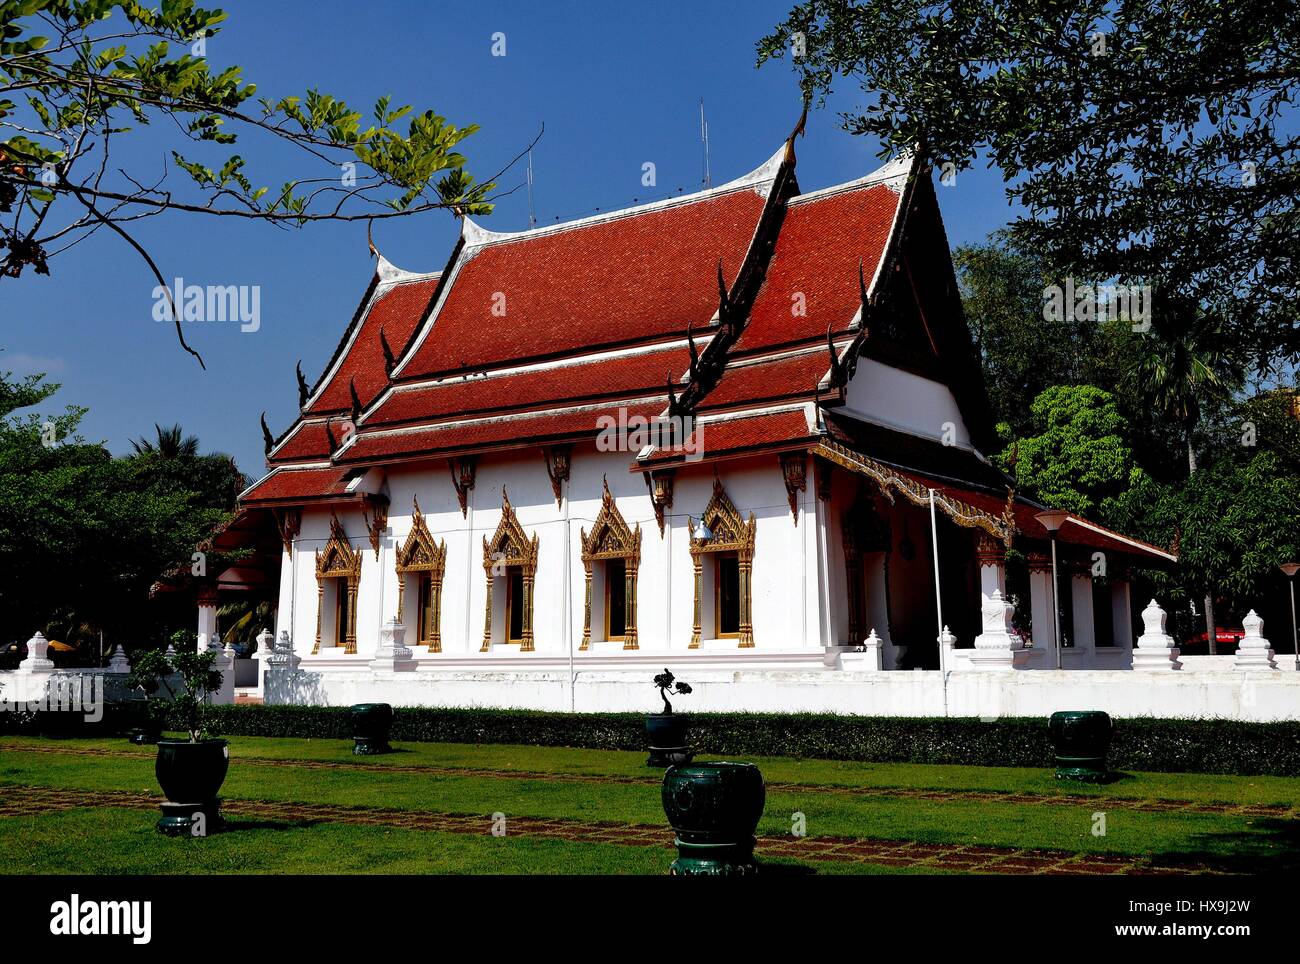 Amphawa, Thailand - December 17, 2010:  Ubosot sanctuary at Wat Amphawa Chetiyaram, originally the home of King Rama III's mother,with gabled roofs, c Stock Photo